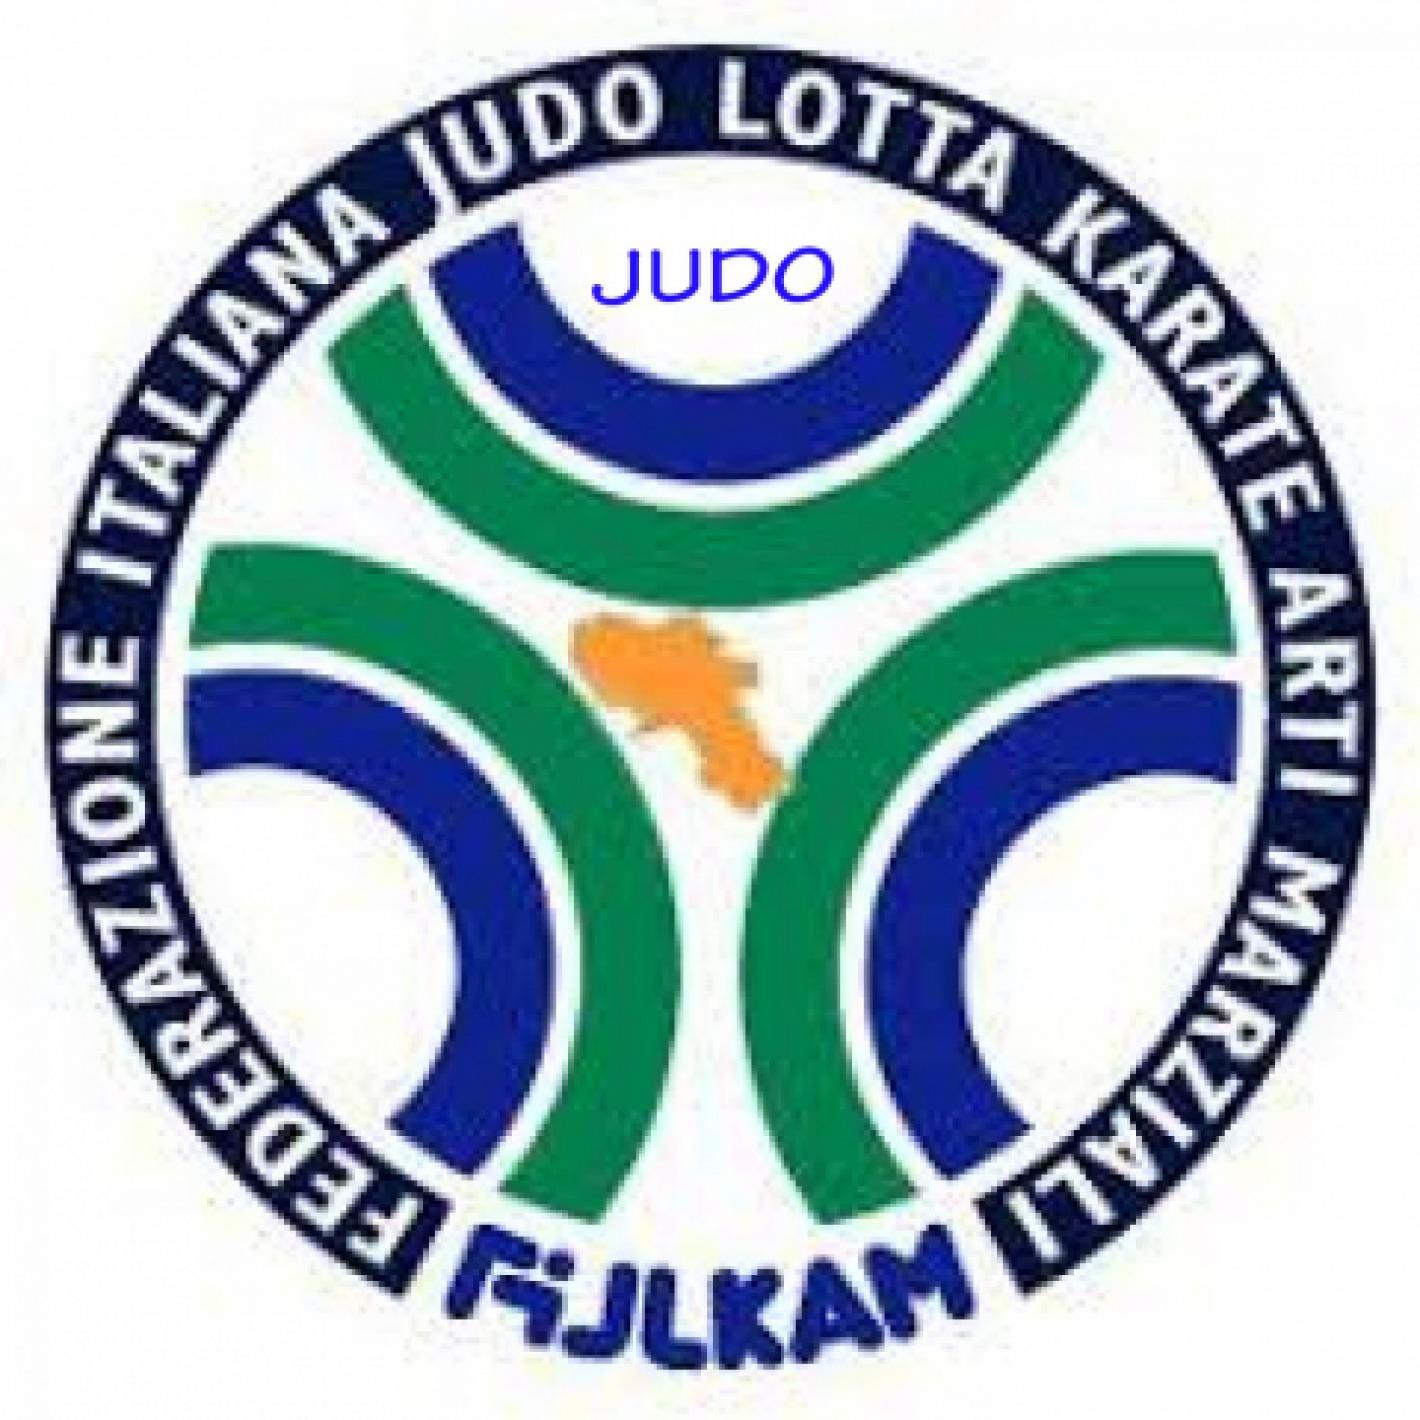 images/campania/judo2021/medium/fijlkamjudo1.jpg